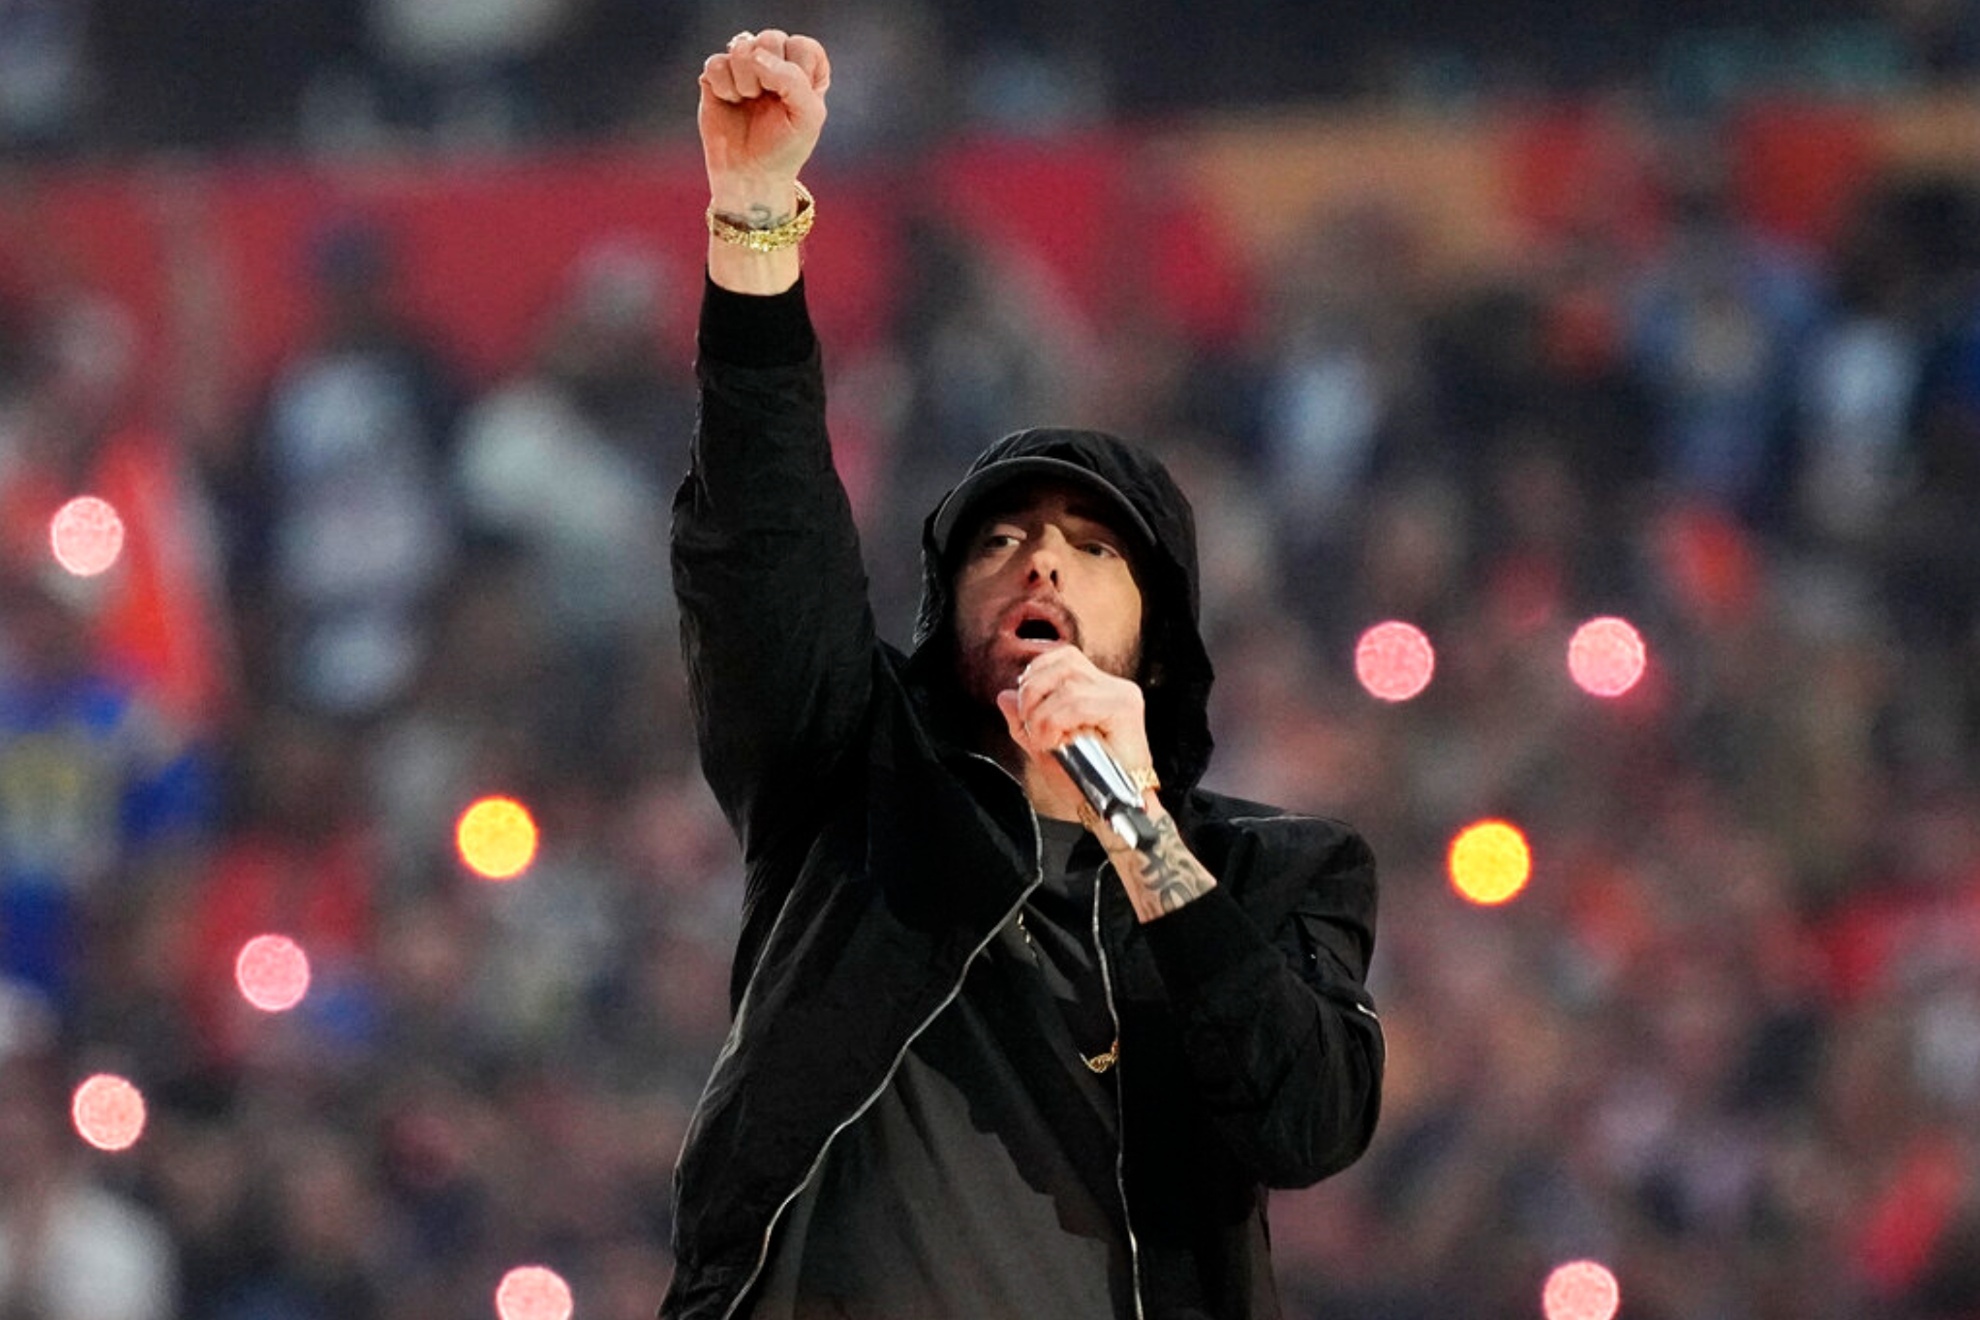 Eminem performing at Super Bowl LVI at SoFi Stadium in Los Angeles, California